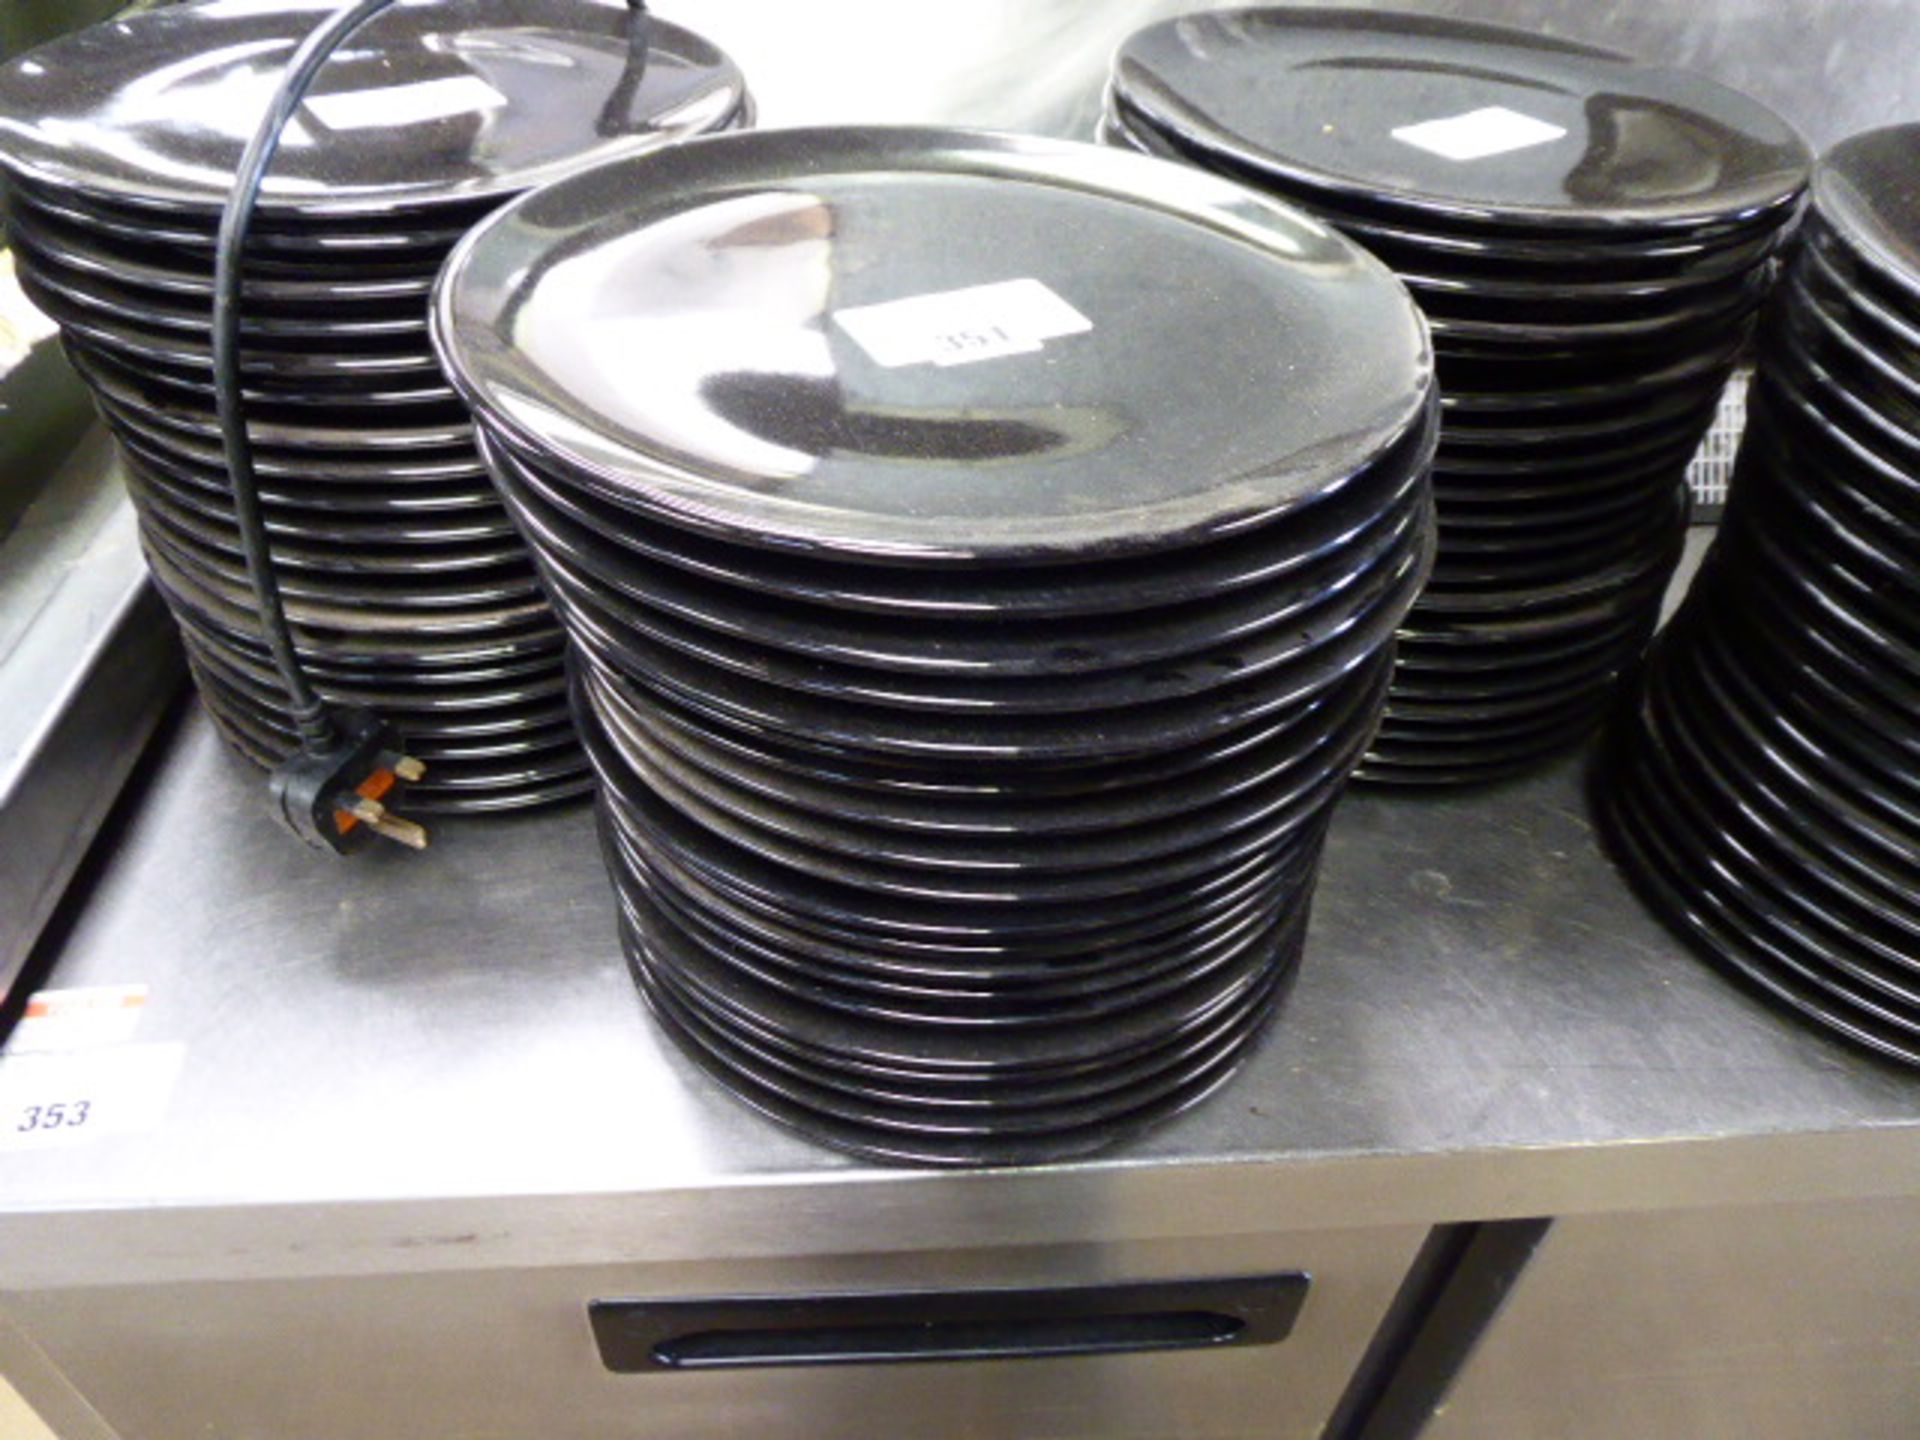 Approx. 20 x 26cm black dinner plates